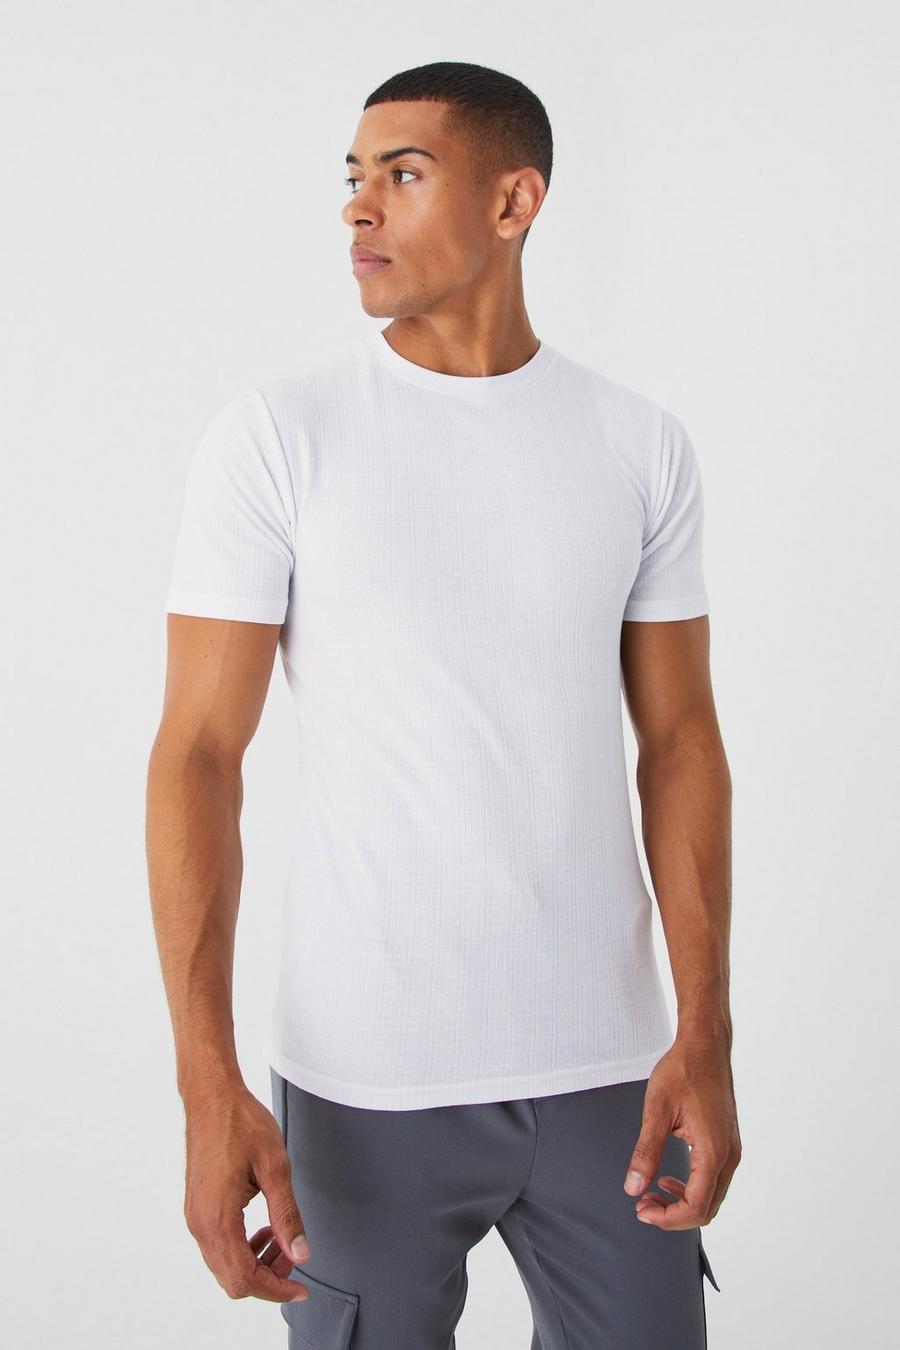 Camiseta de canalé ajustada al músculo, White blanco